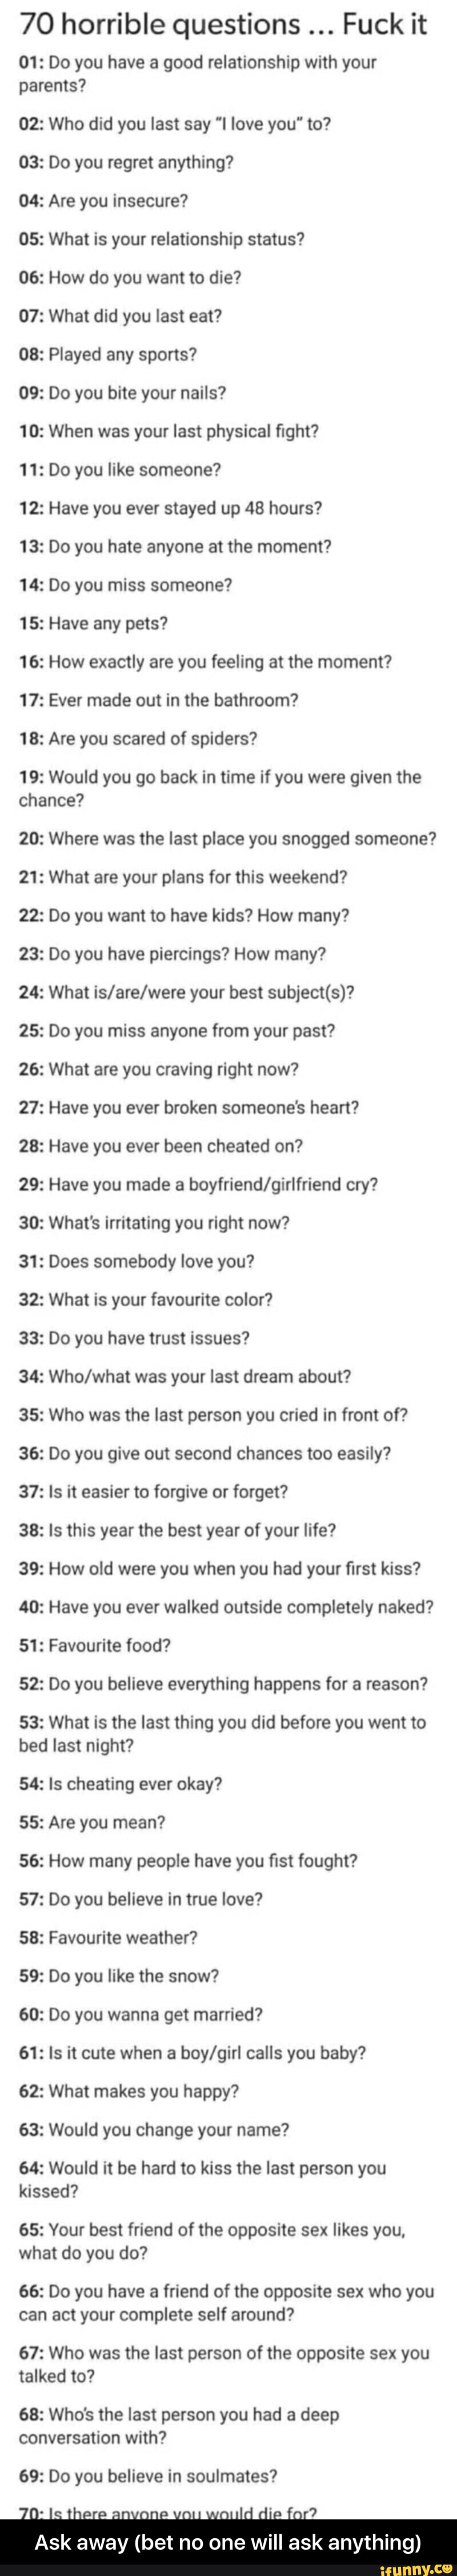 70 questions Blank Meme Template